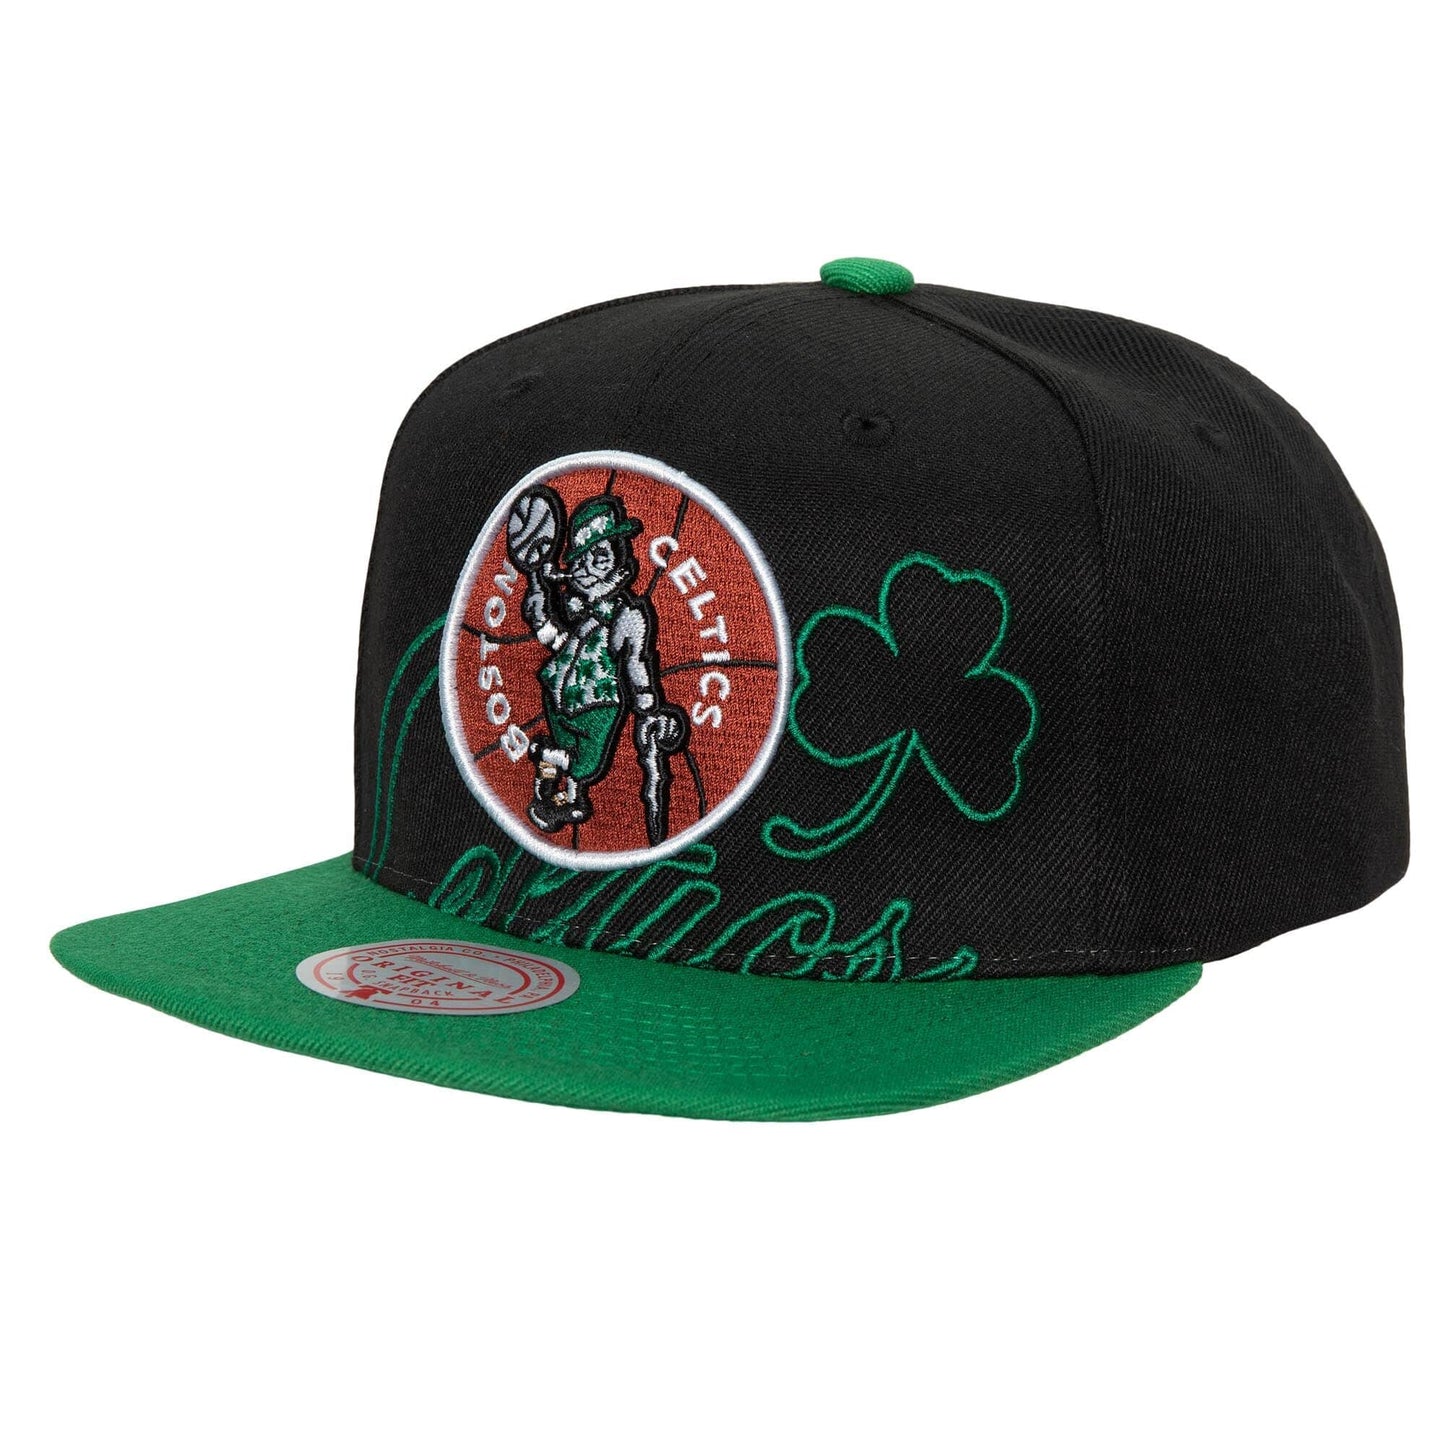 Men's Boston Celtics Mitchell & Ness 2 Tone Black and Green Low Big Face Hardwood Classics Snapback Hat